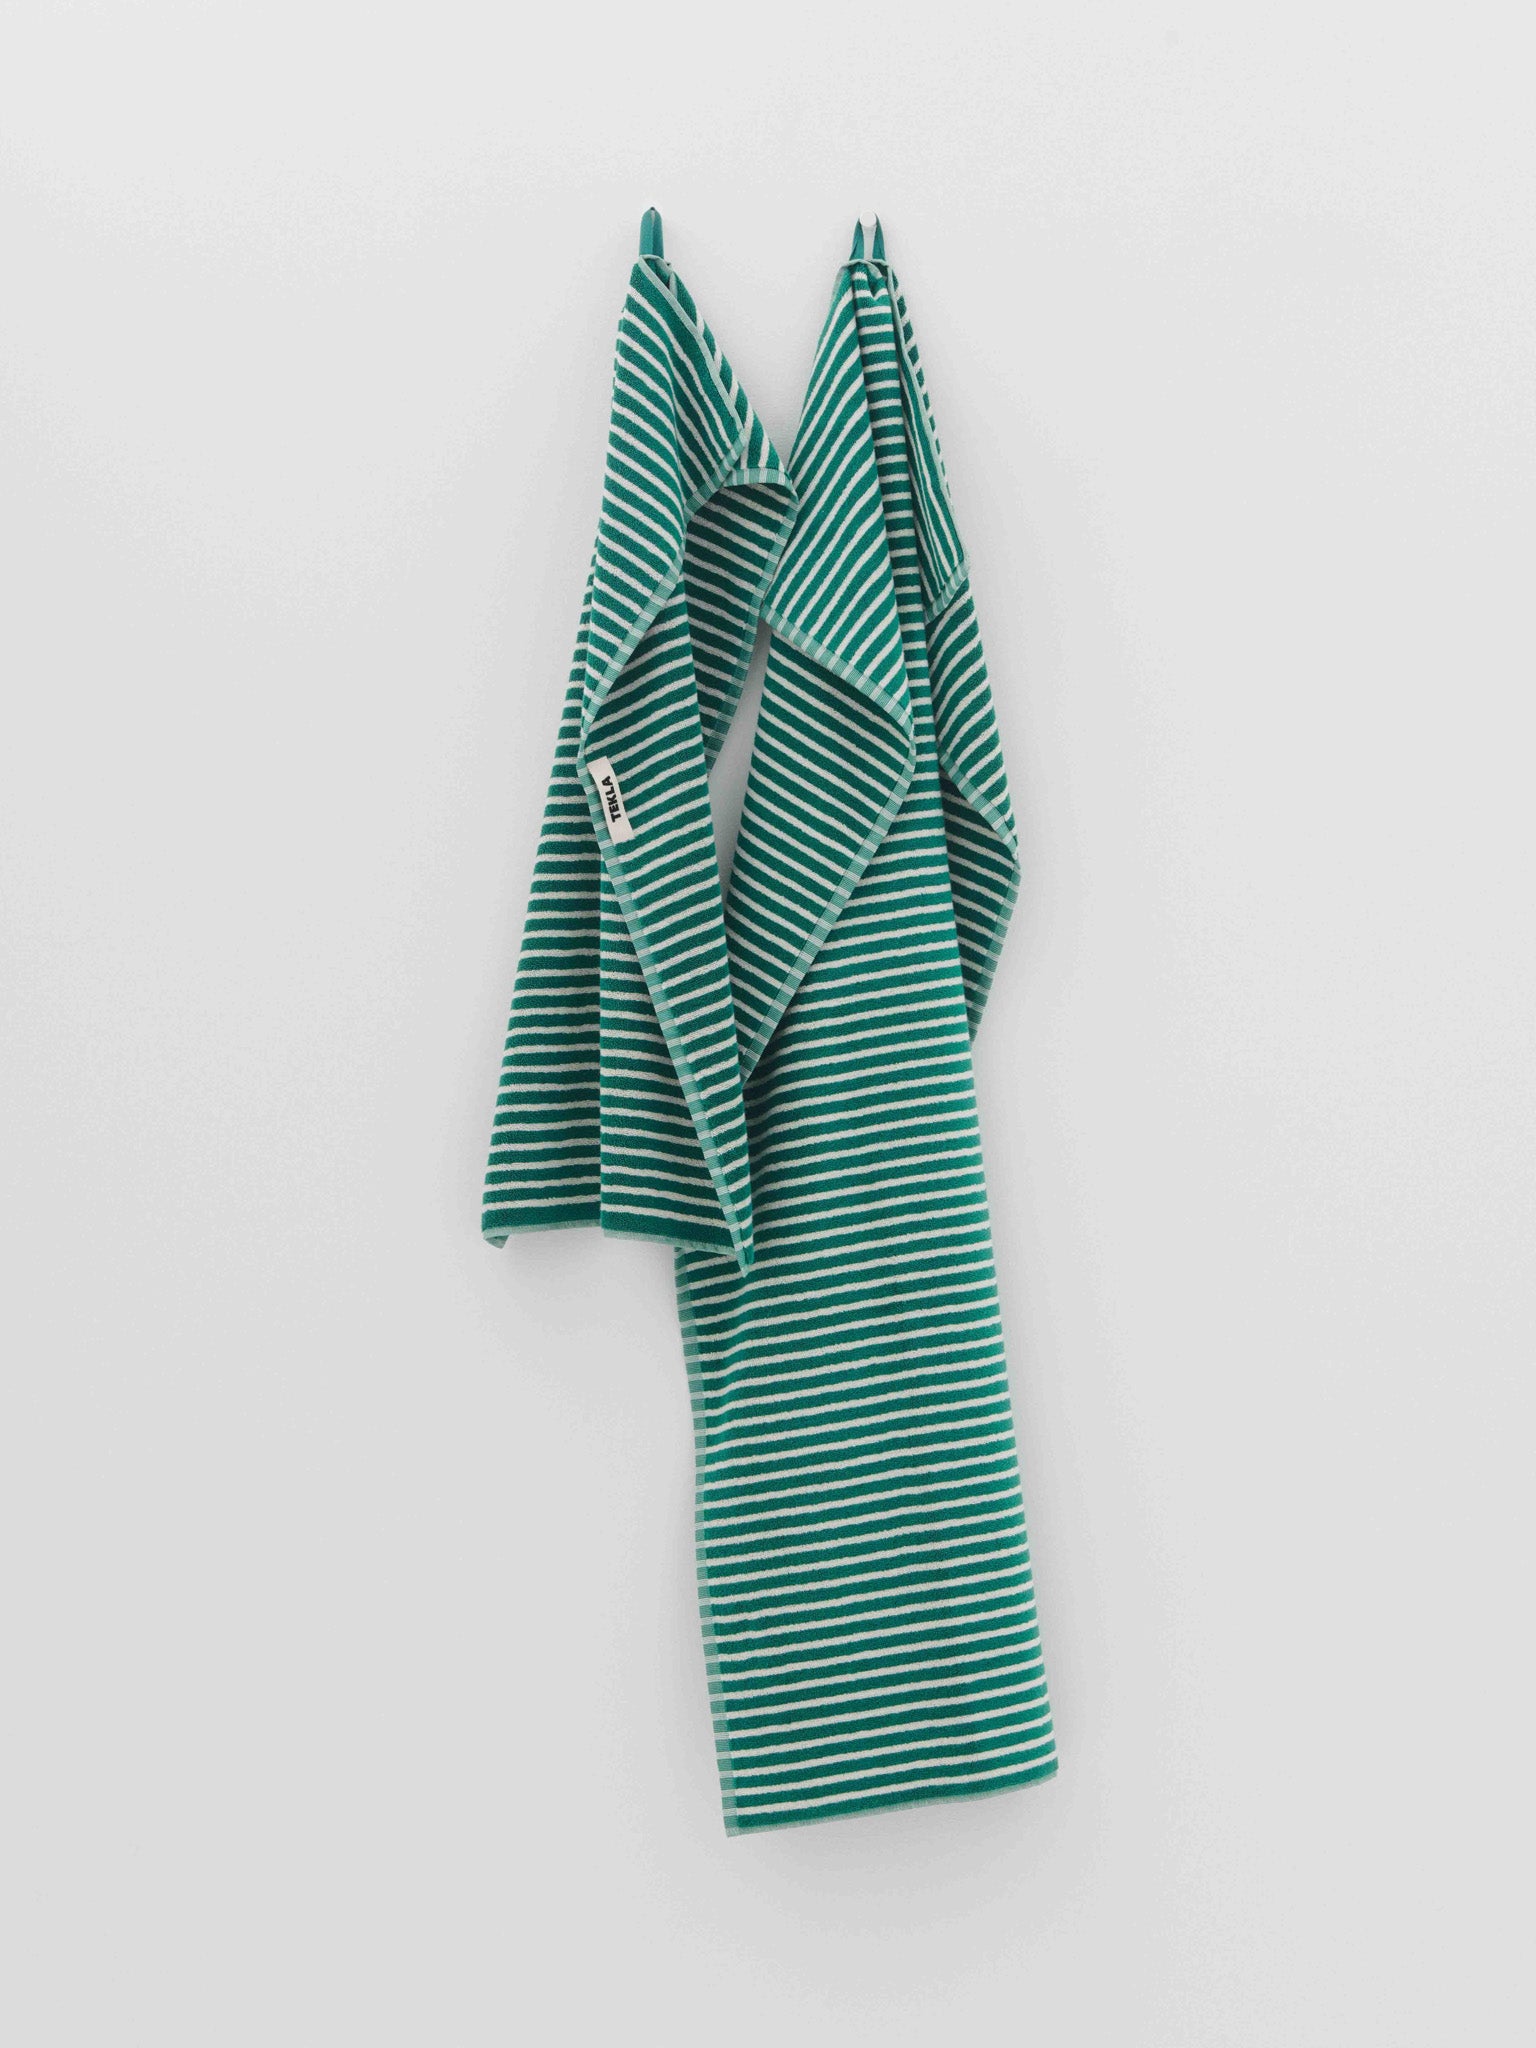 Bath Towel in Teal Green Stripes